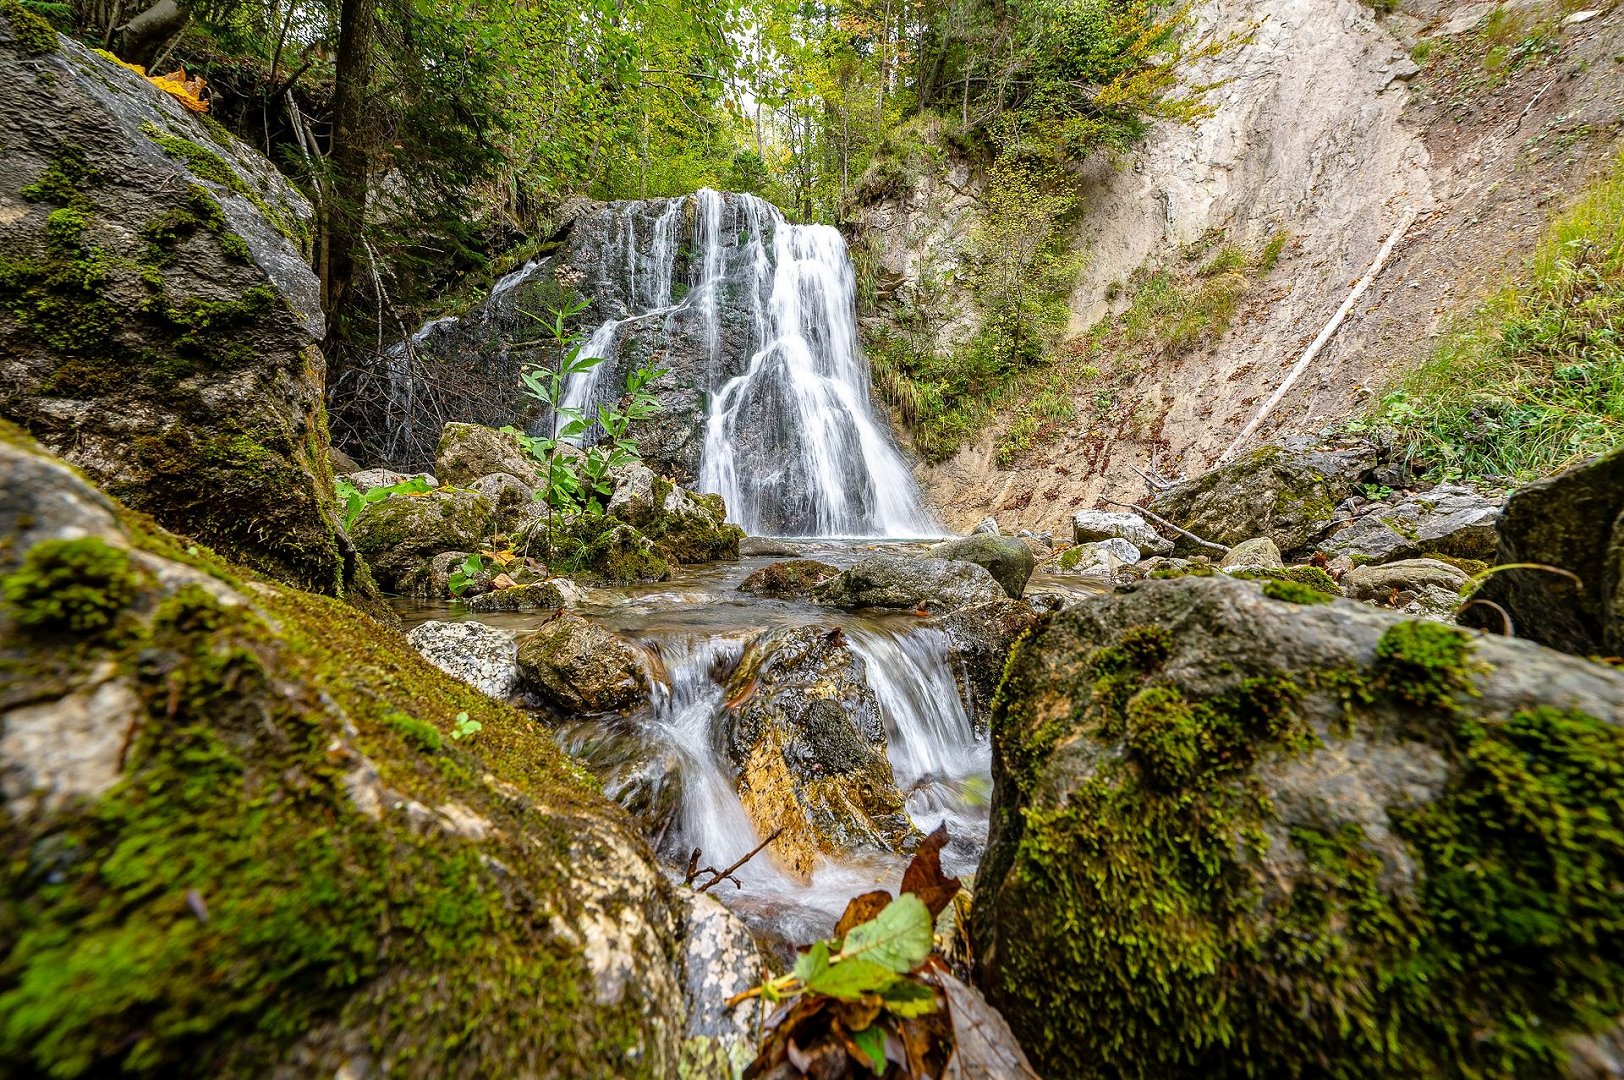 Javornik waterfalls